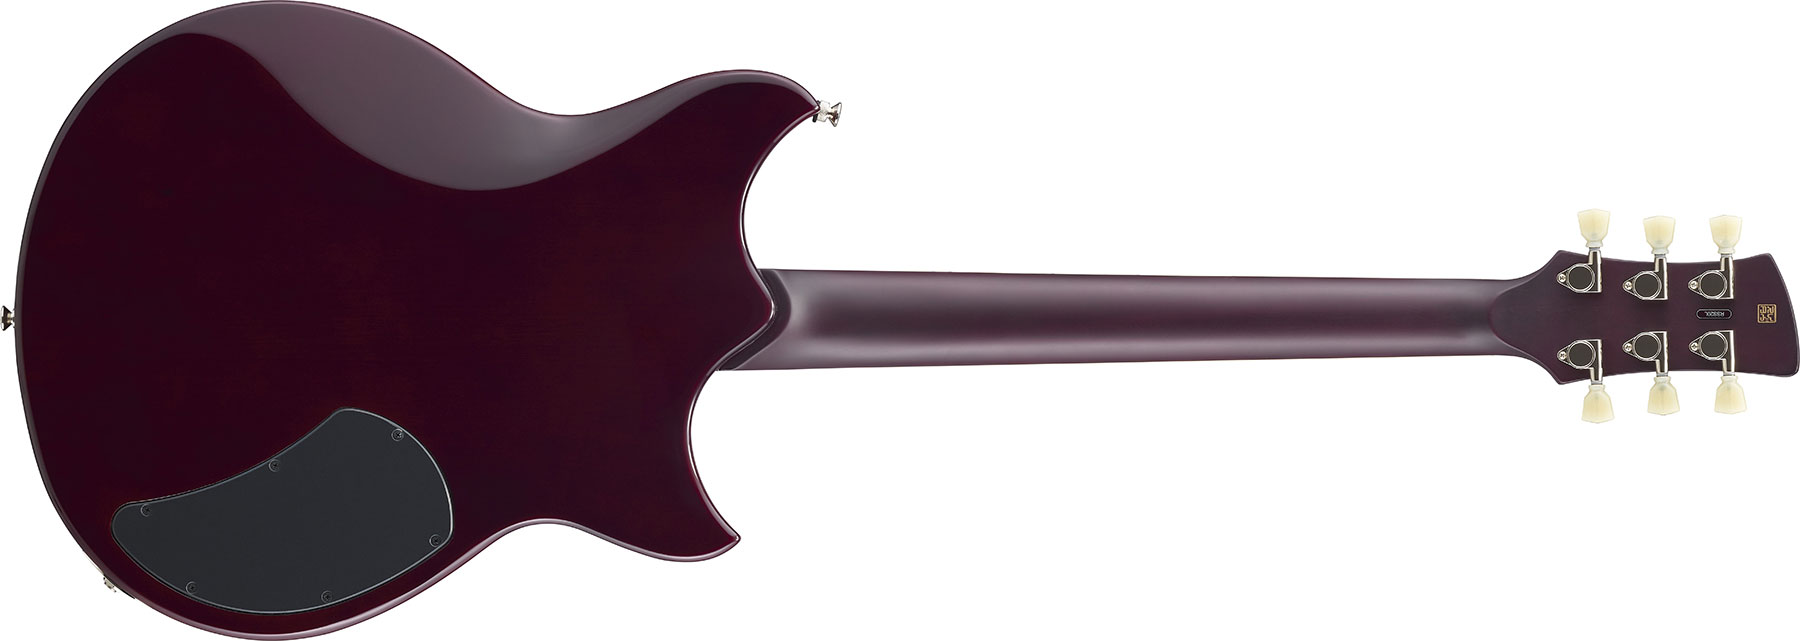 Yamaha Rss20l Revstar Standard Lh Gaucher Hh Ht Rw - Black - E-Gitarre für Linkshänder - Variation 2